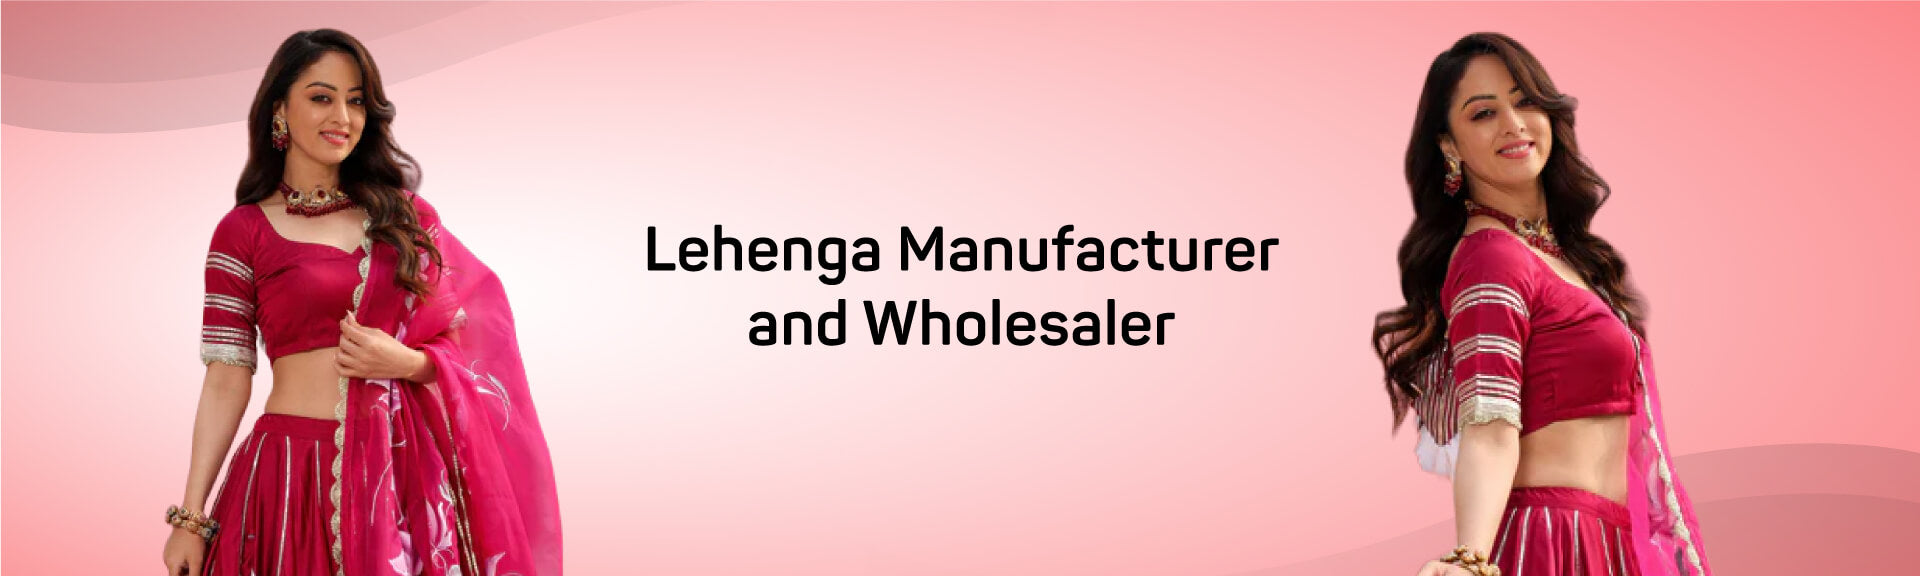 Lehengas Manufacturer, Supplier and Wholesaler in Surat, India